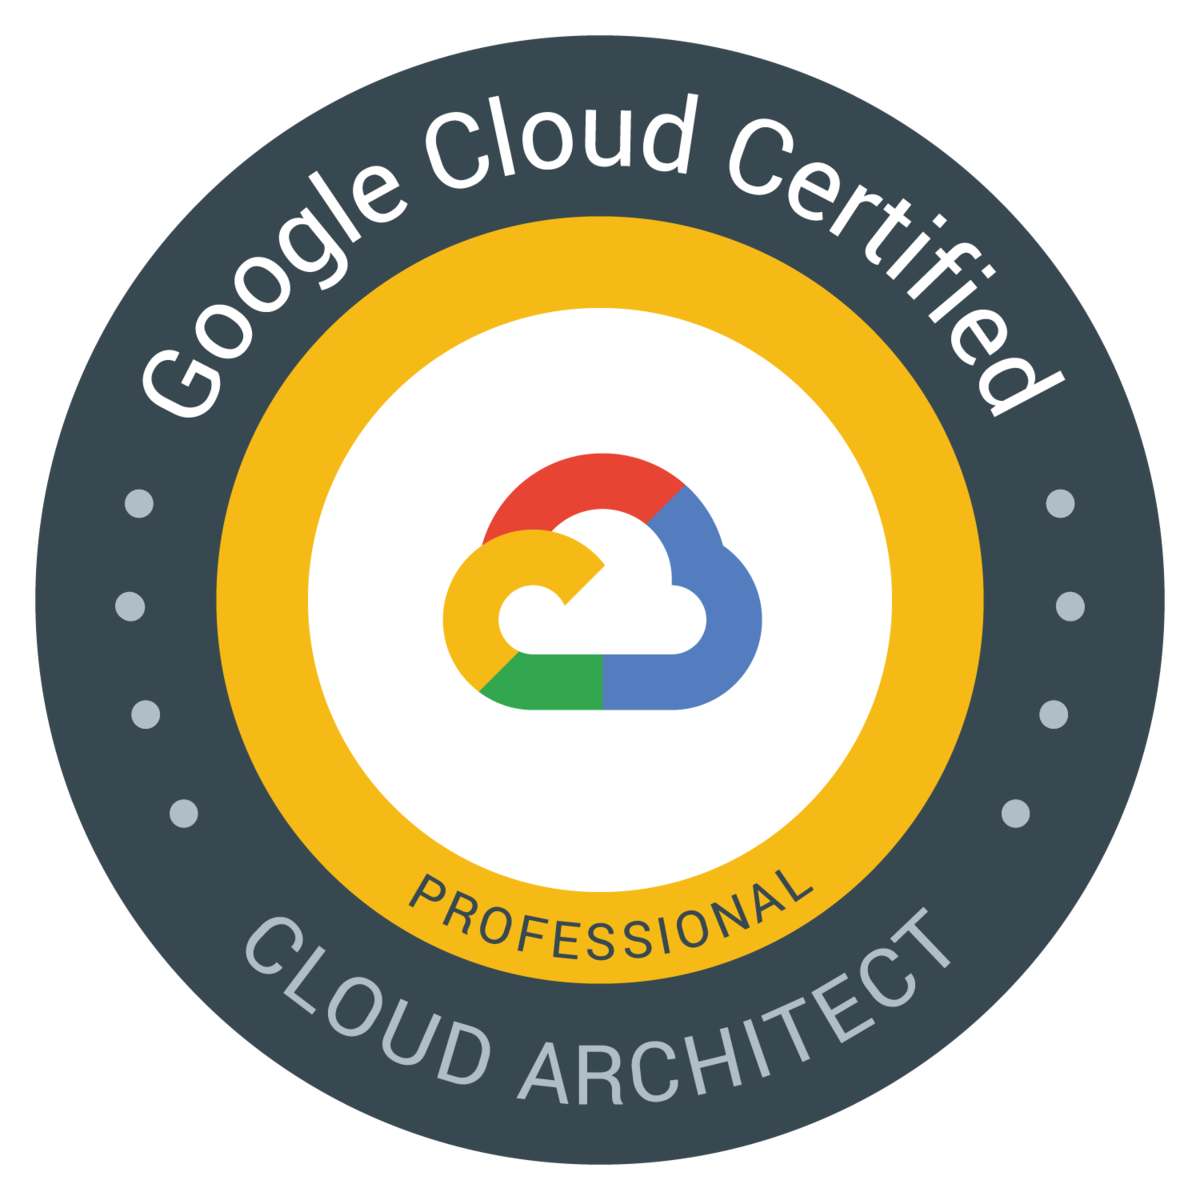 Google: Professional Cloud Architect